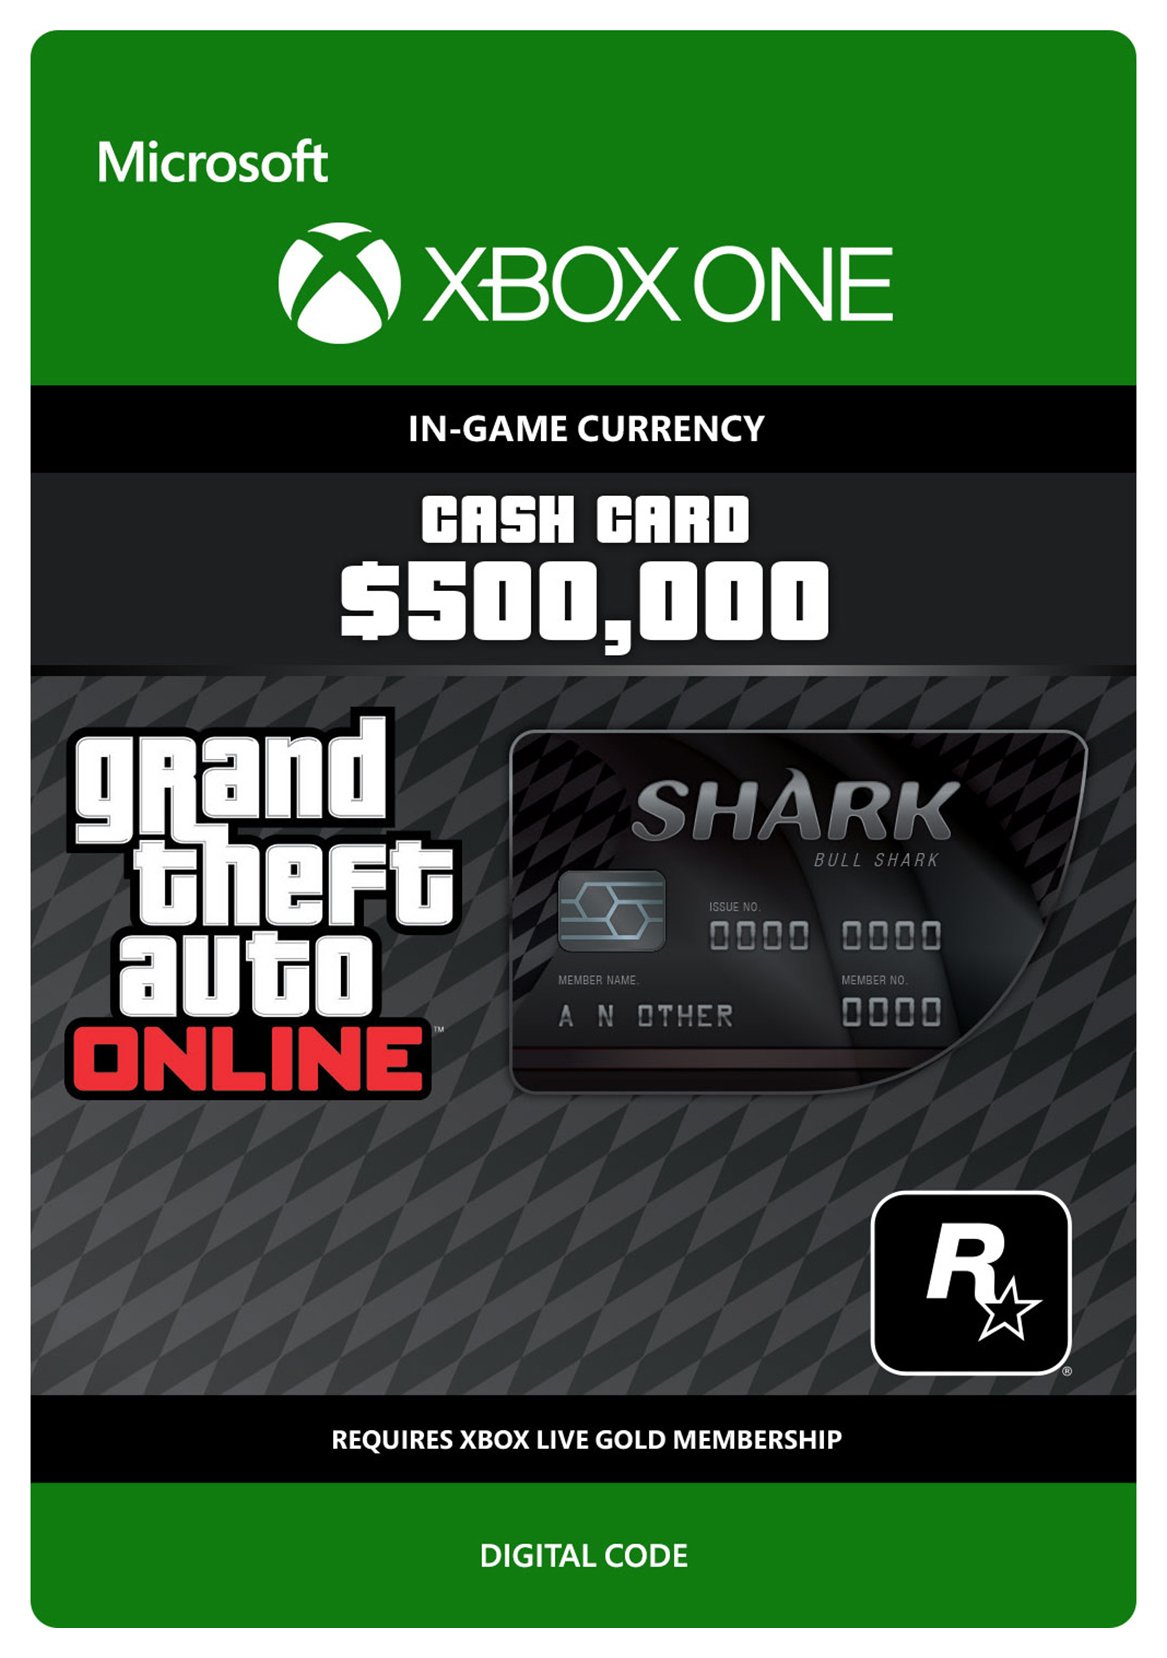 Grand Theft Auto V Bull Shark Xbox One Cash Card Review